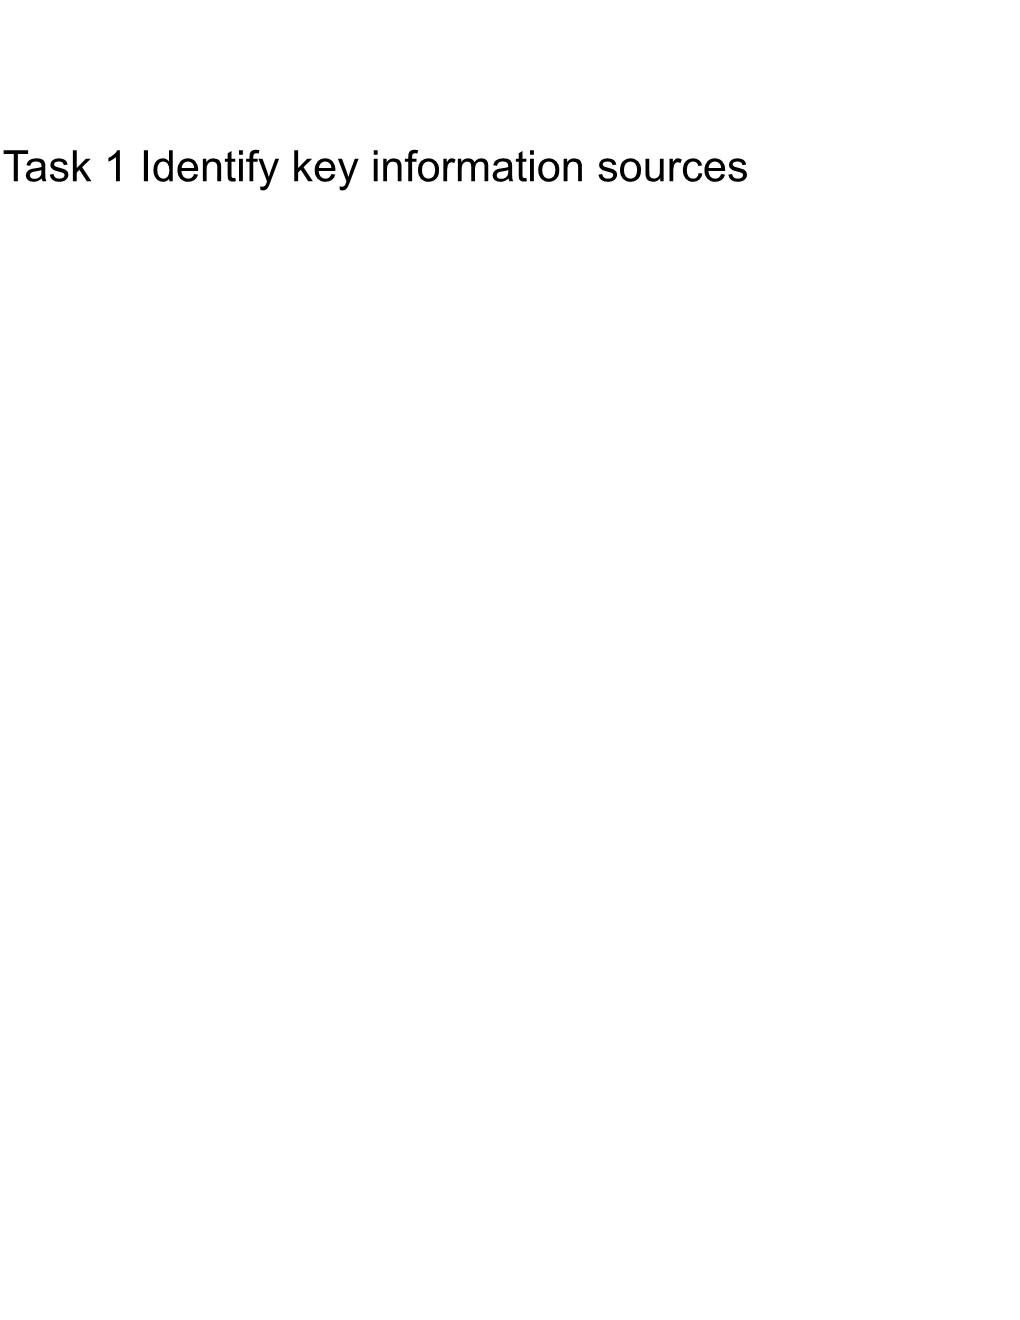 Task 1 Identify Key Information Sources